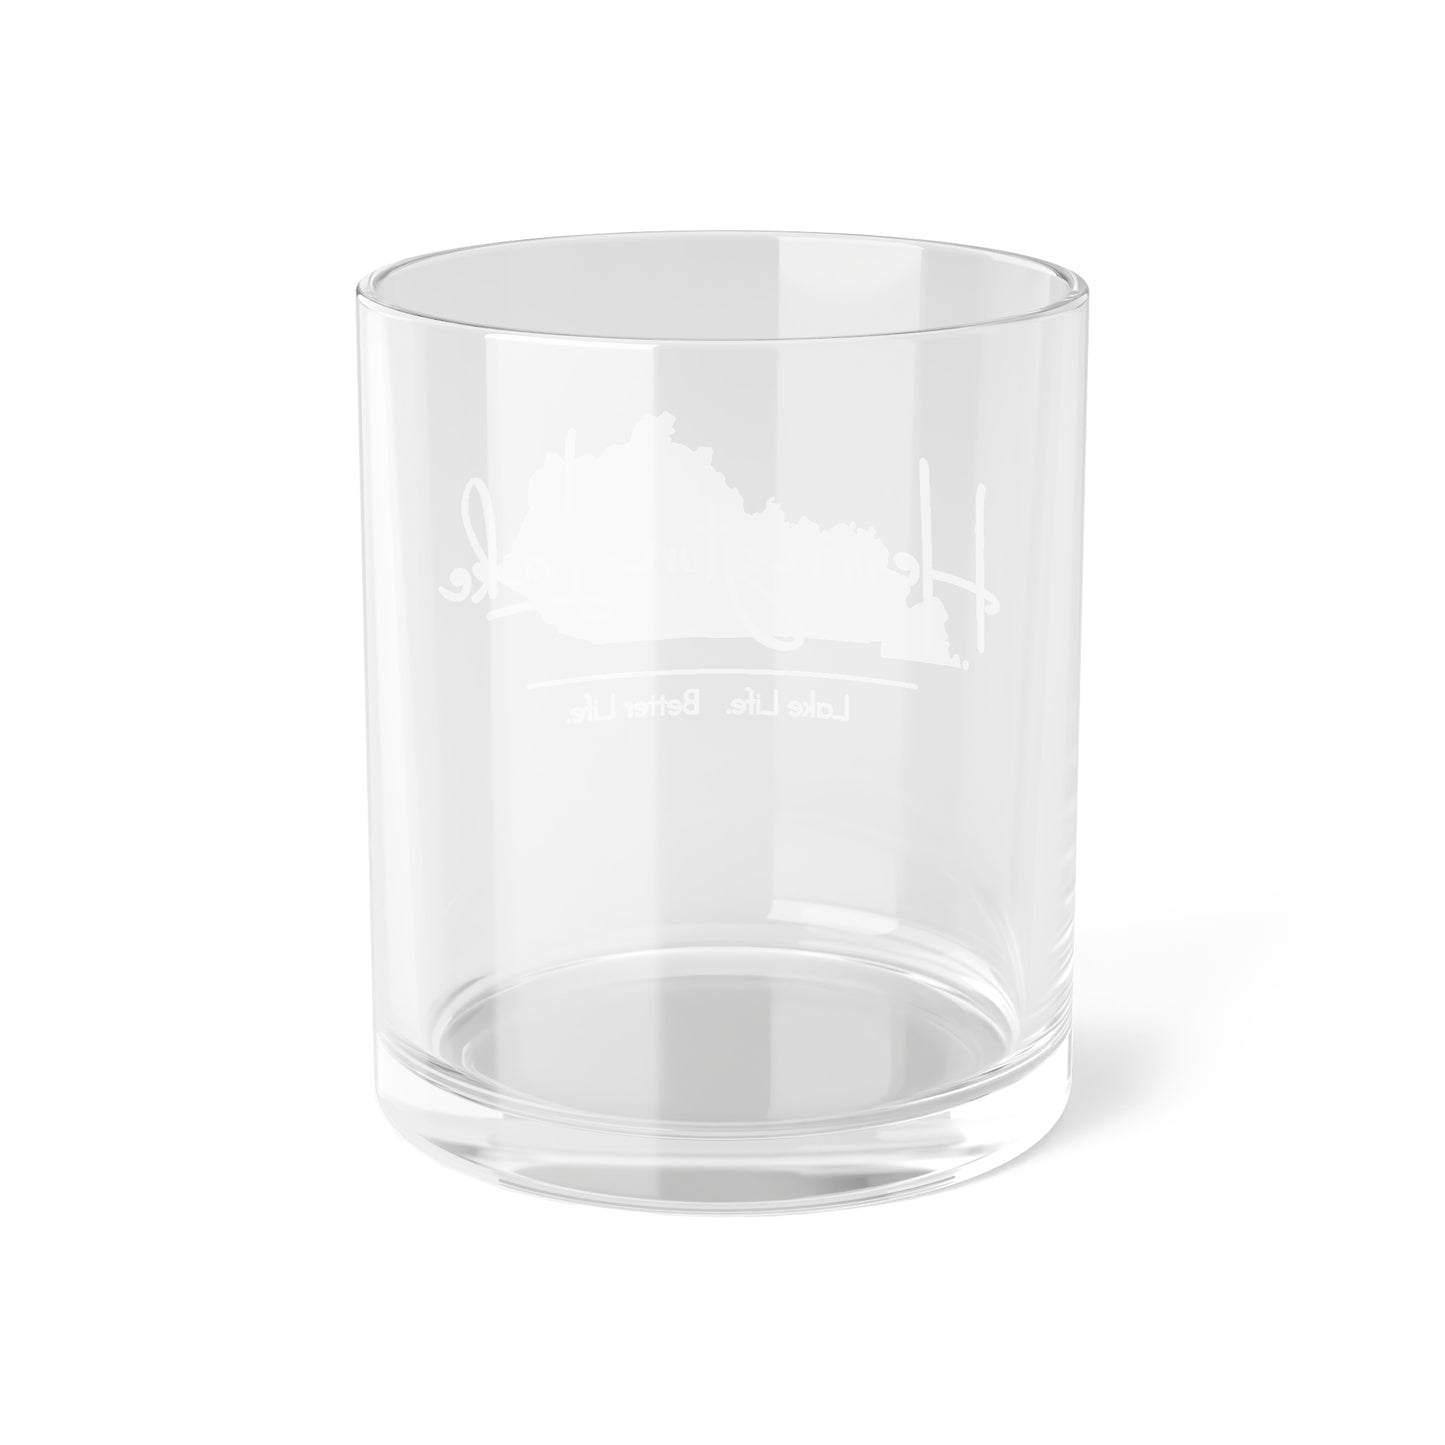 Herrington Lake Signature Collection Bar Glass, 10oz (White/Grey)